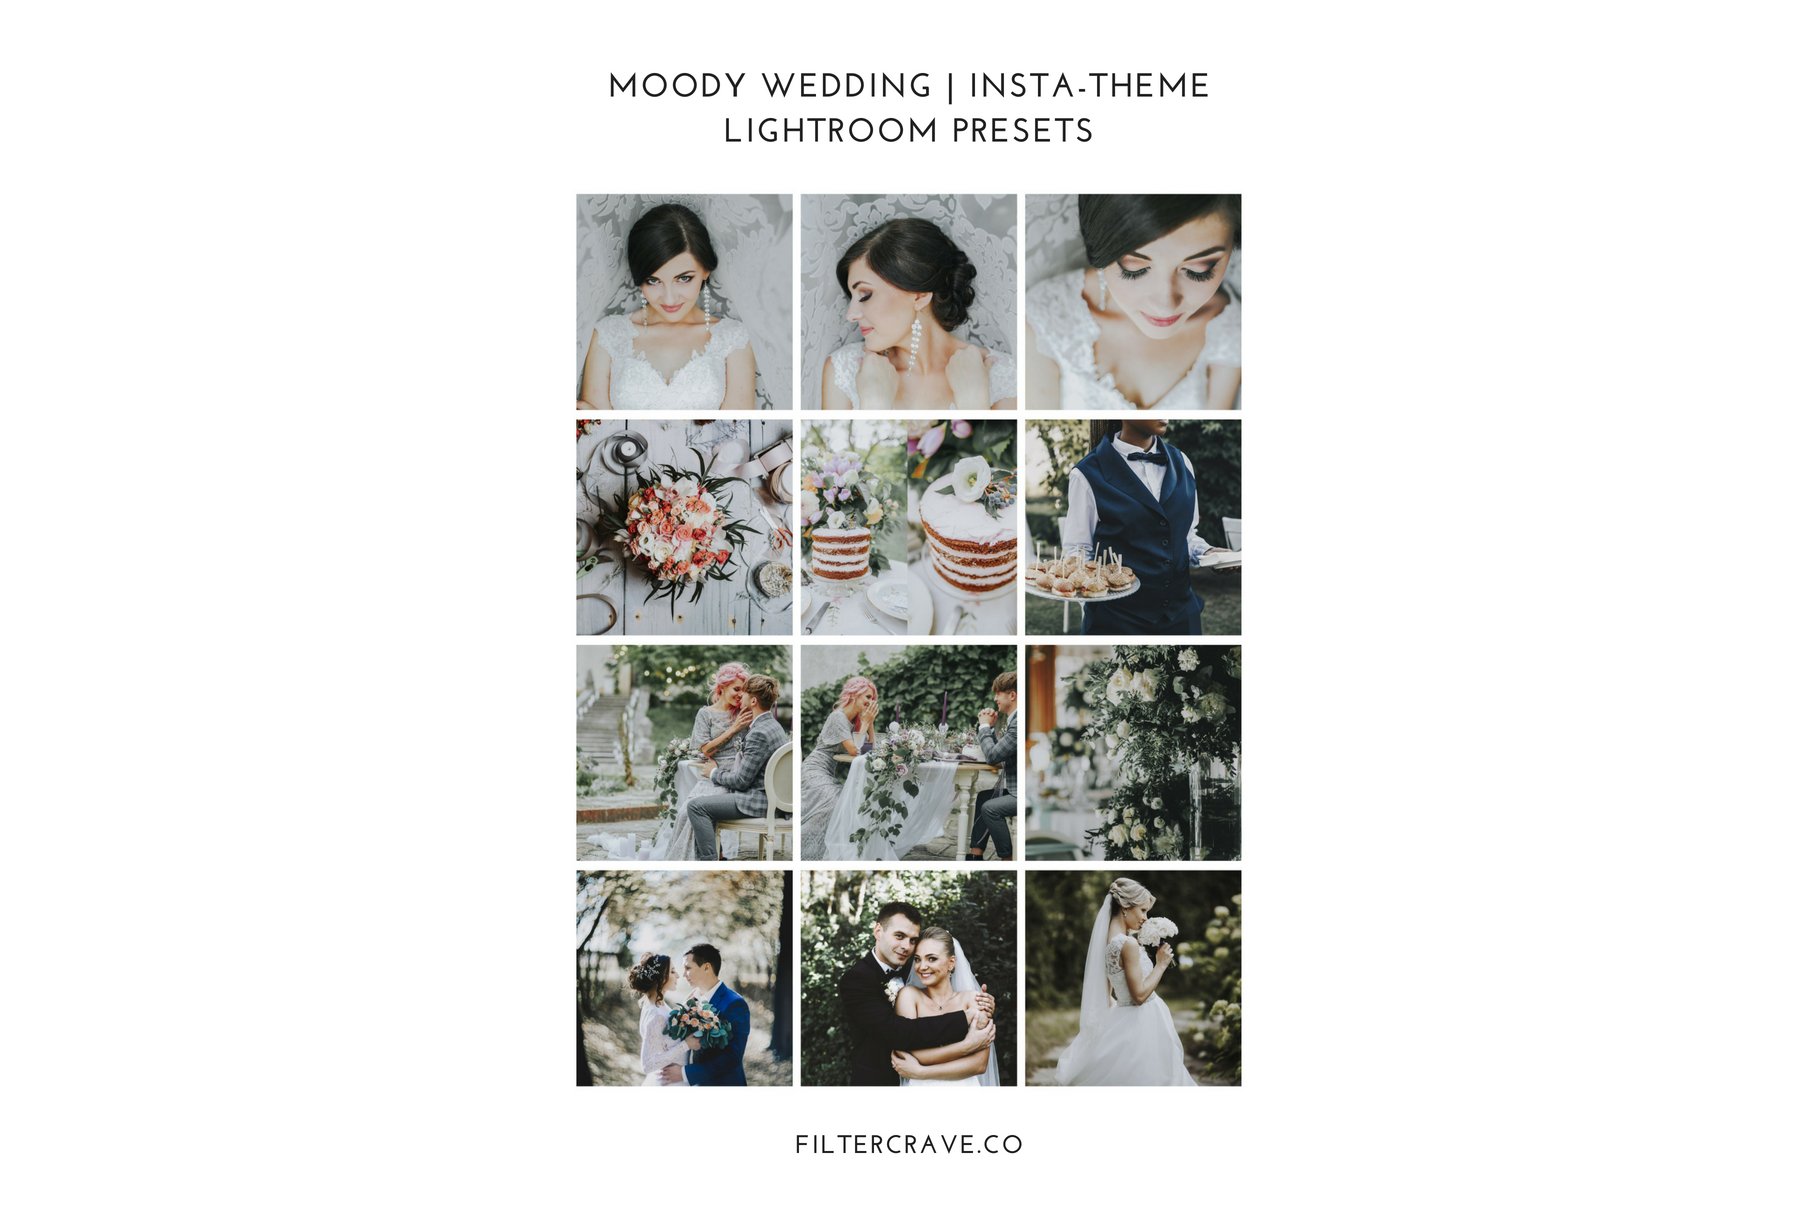 Moody Wedding Lightroom Presetspreview image.